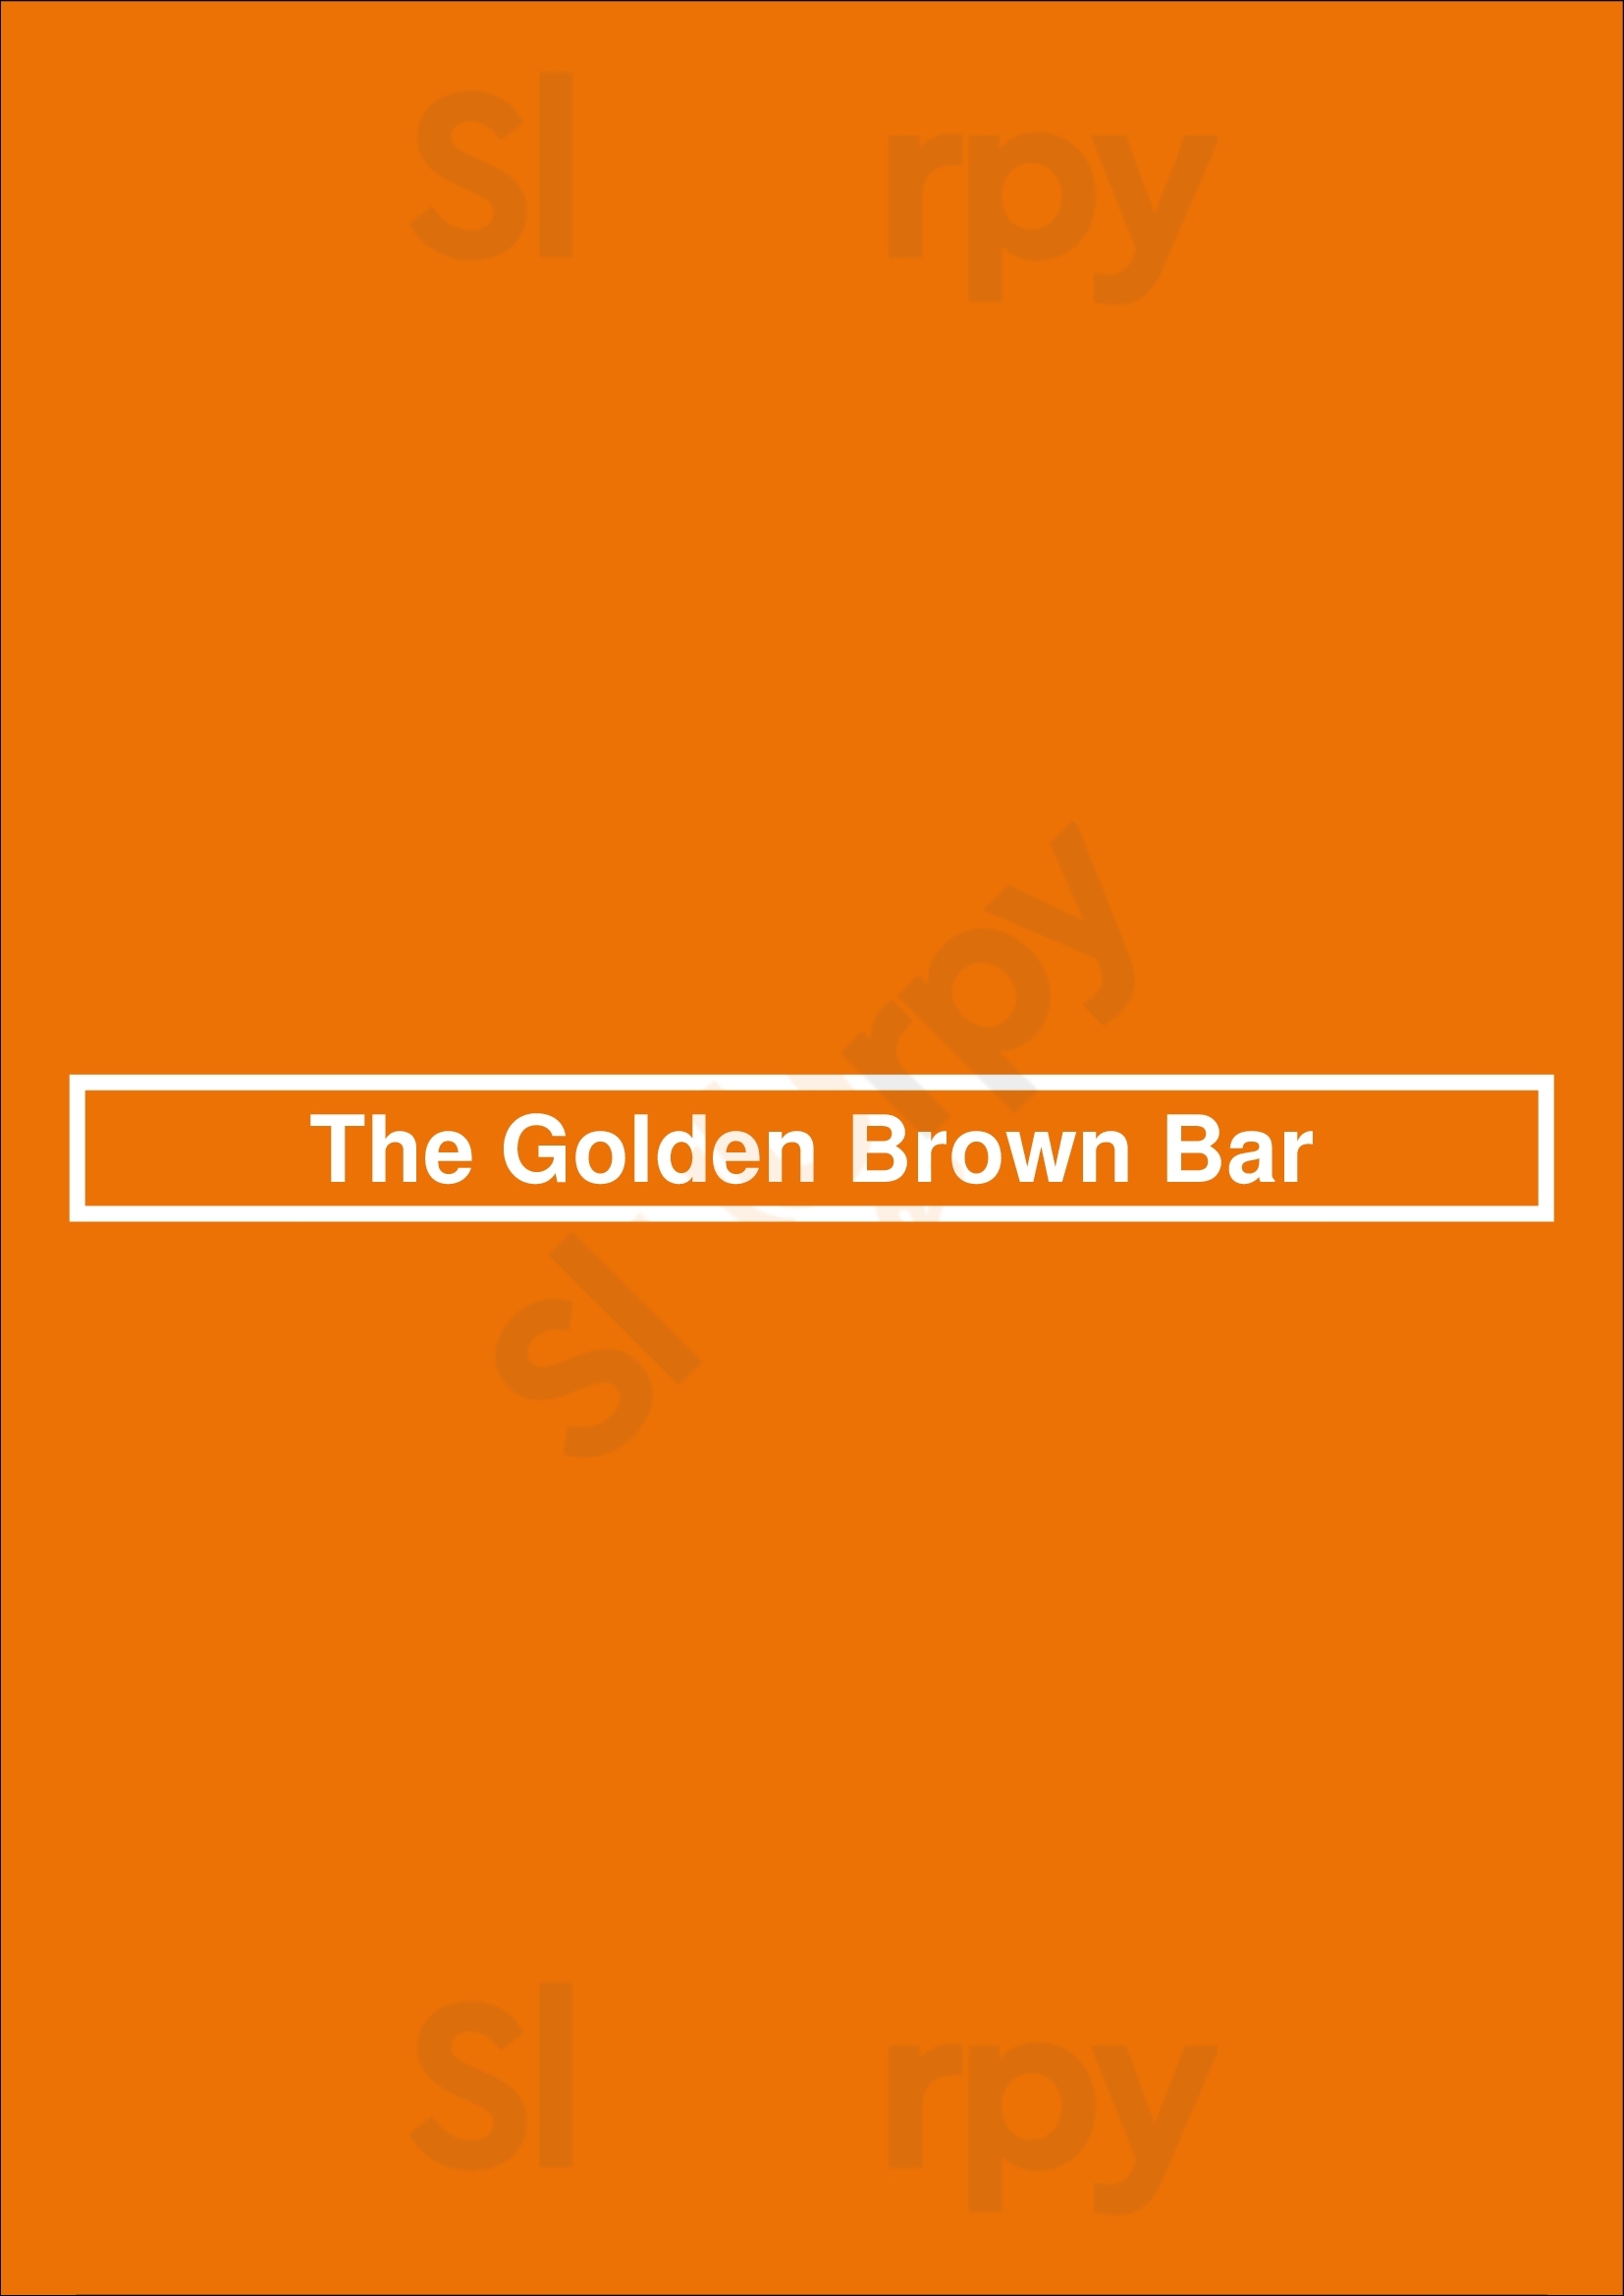 The Golden Brown Bar Amsterdam Menu - 1